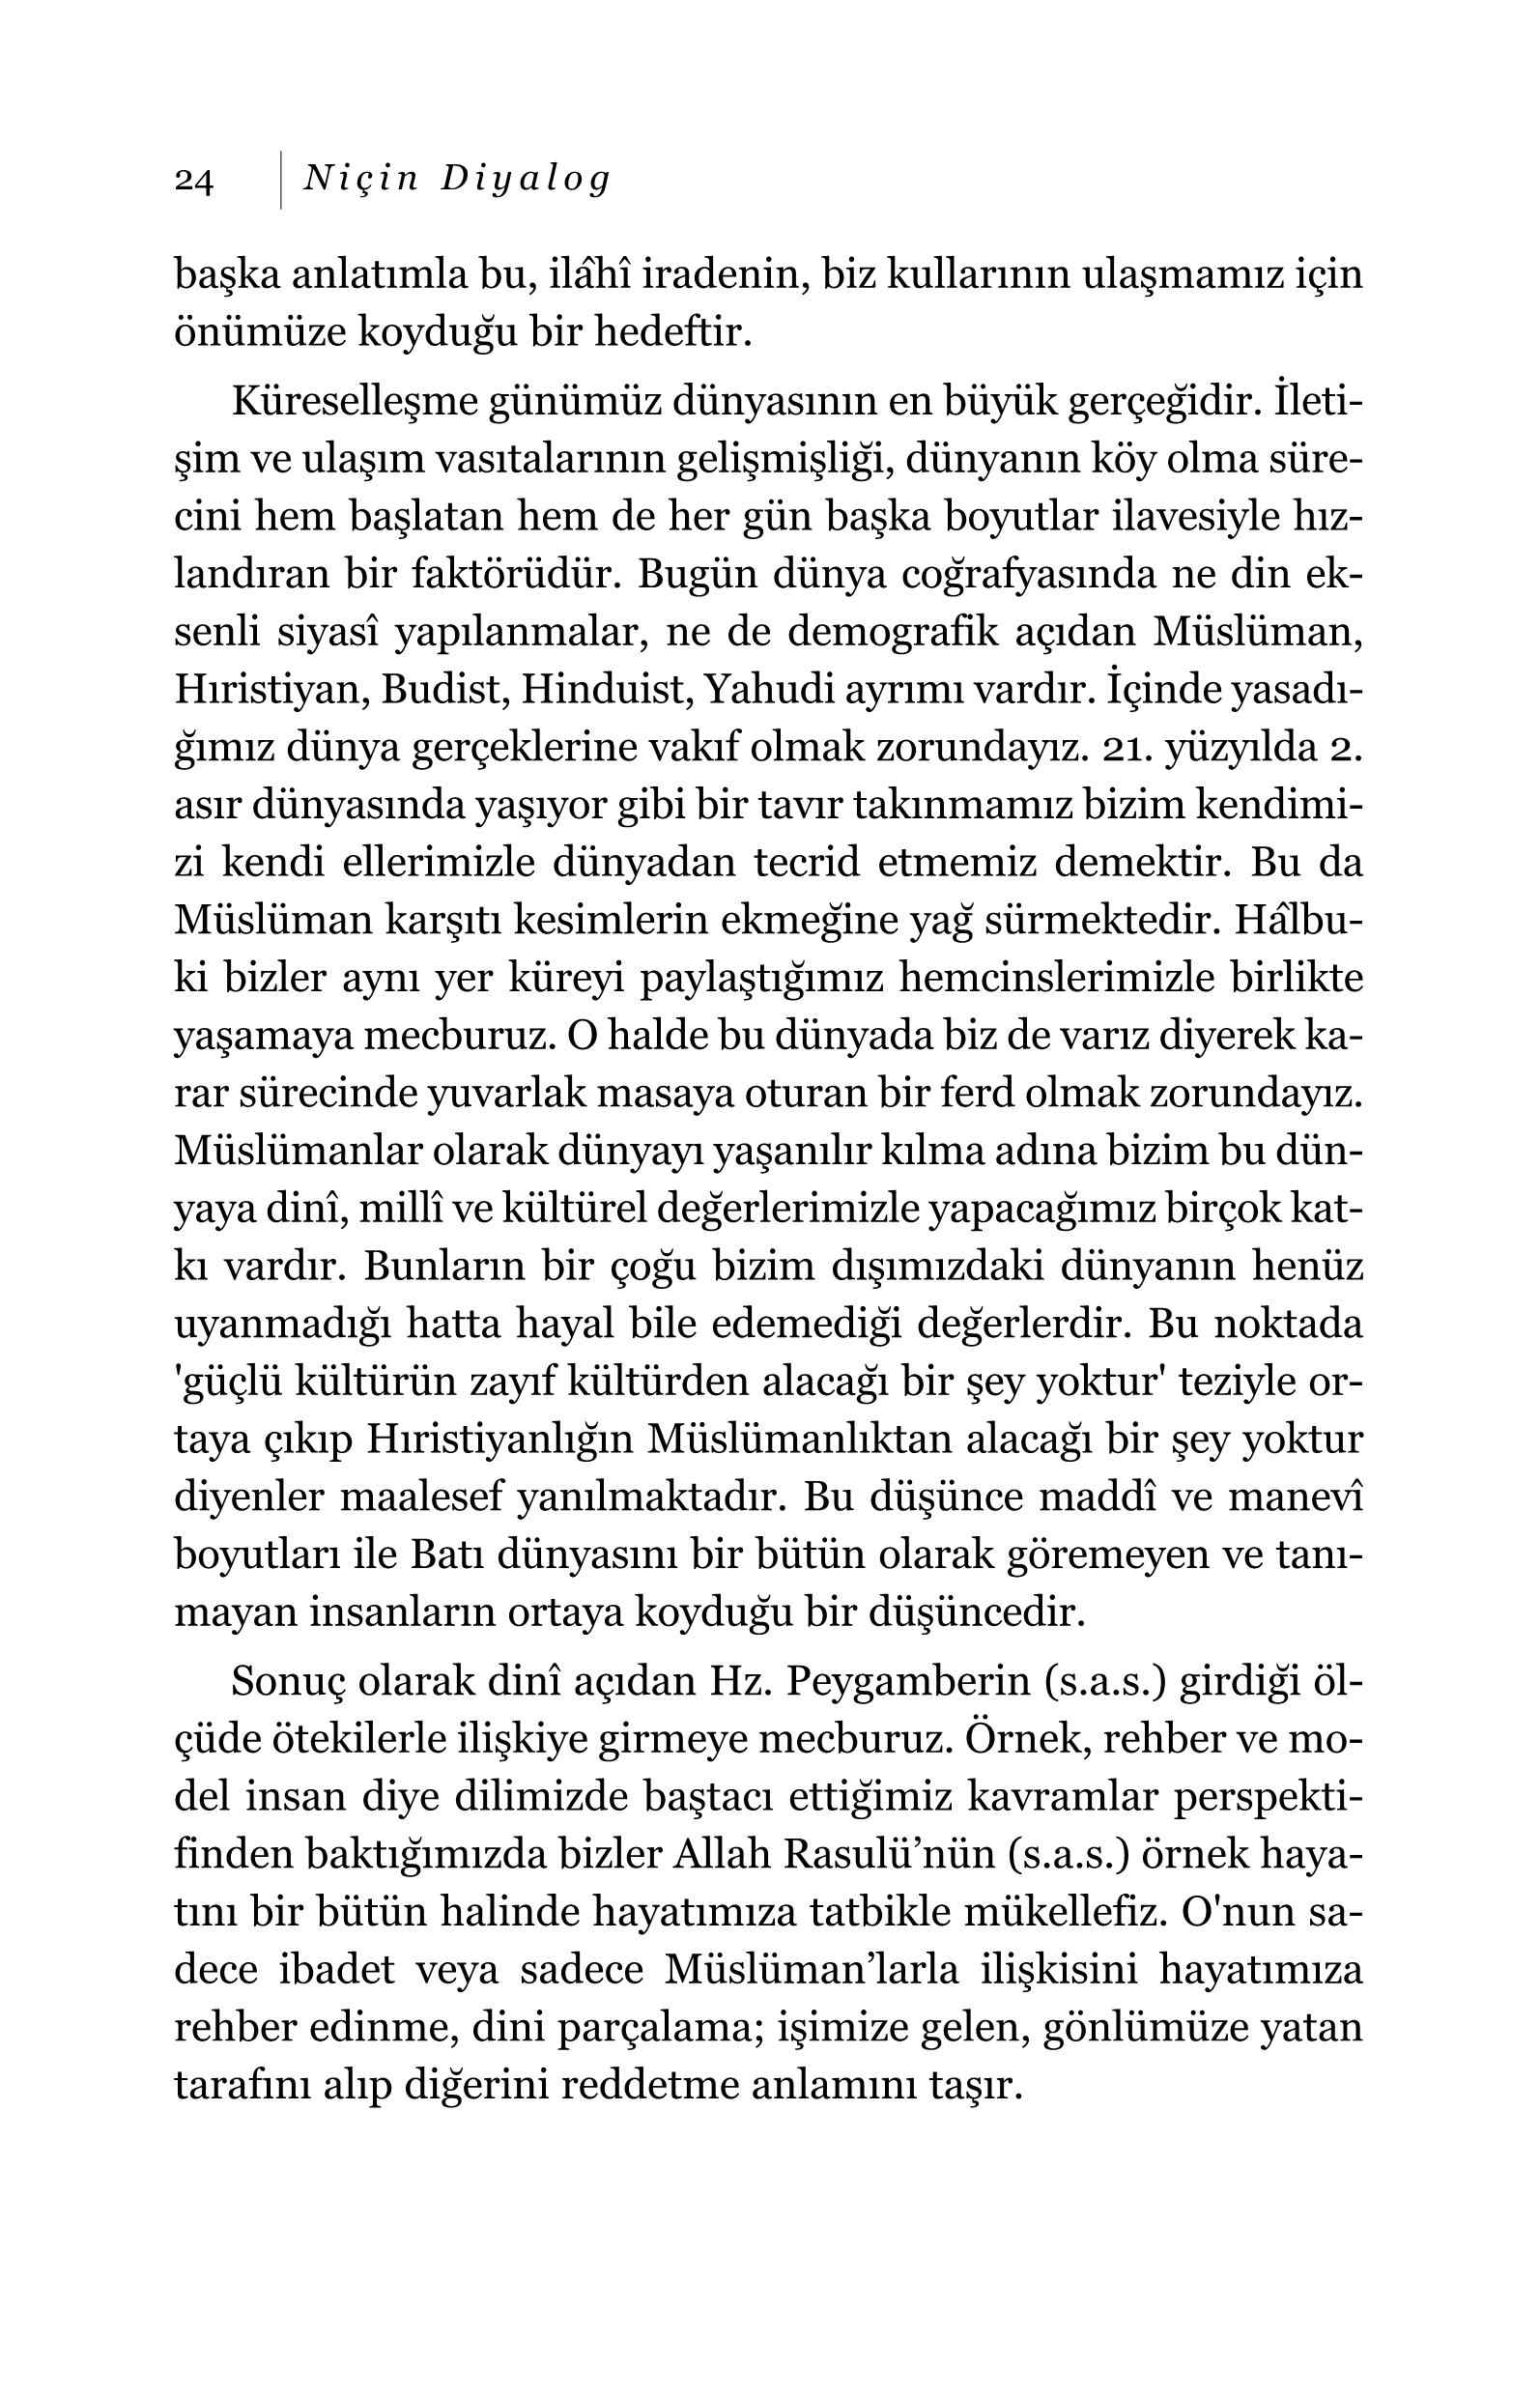 Ahmet Kurucan - Nicin Diyalog - Diyalogun Temelleri - IsikYayinlari.pdf, 149-Sayfa 